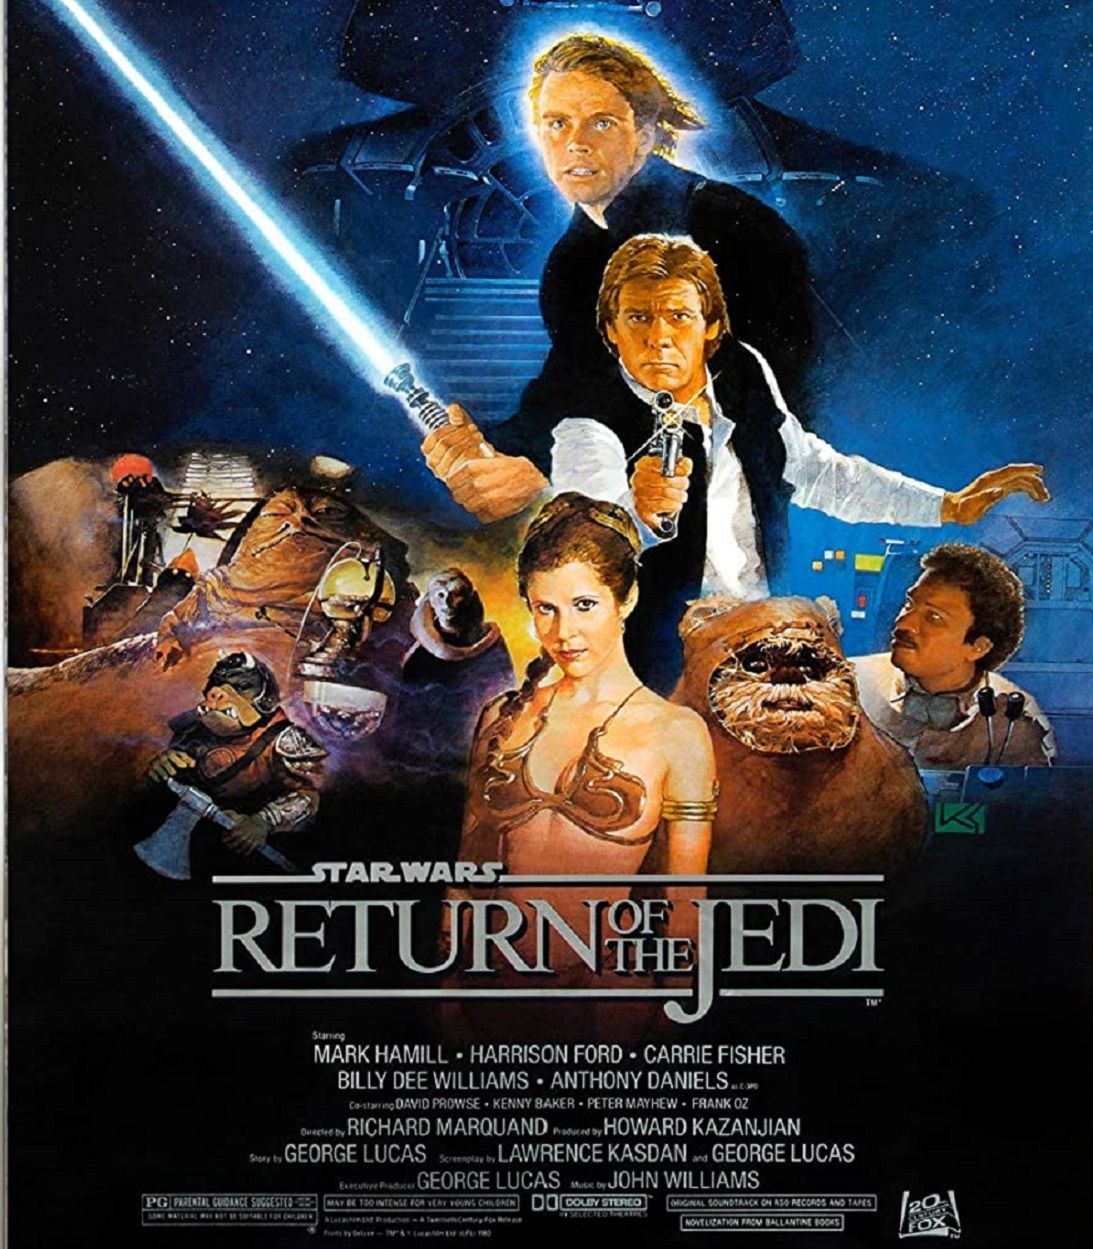 Theatrical poster for Star Wars Episode VI: Return of the Jedi